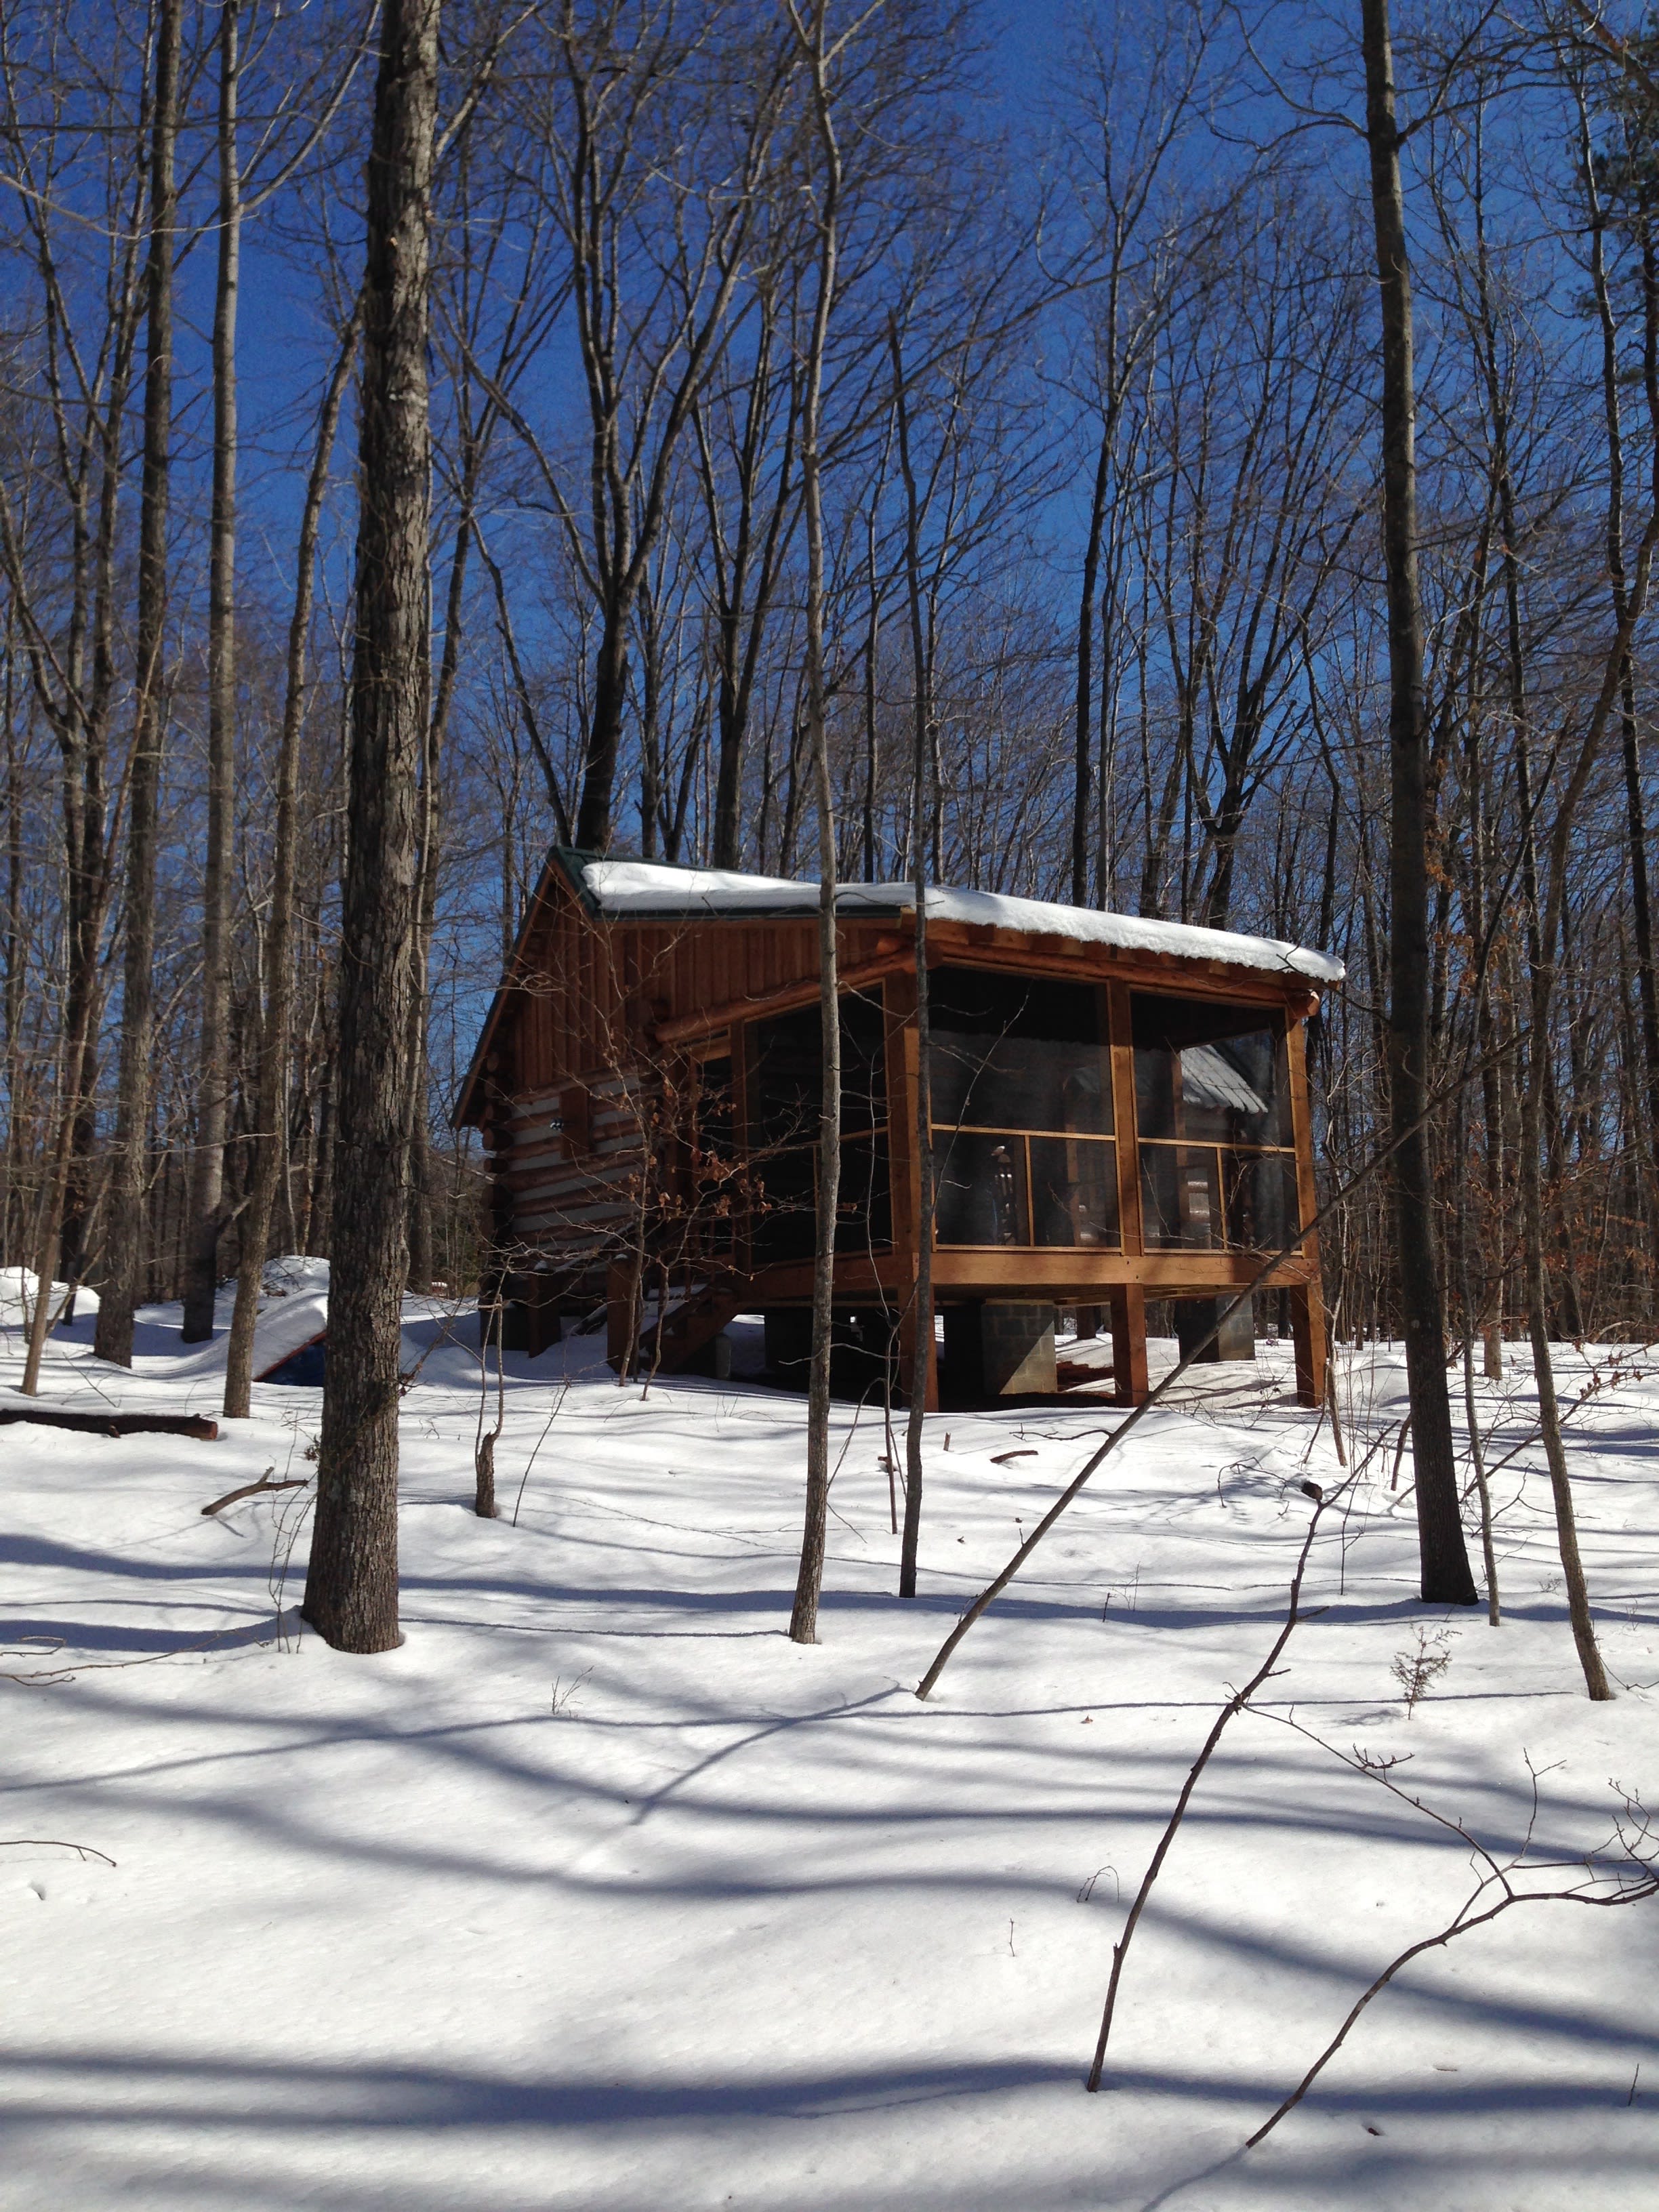 The cabin in winter